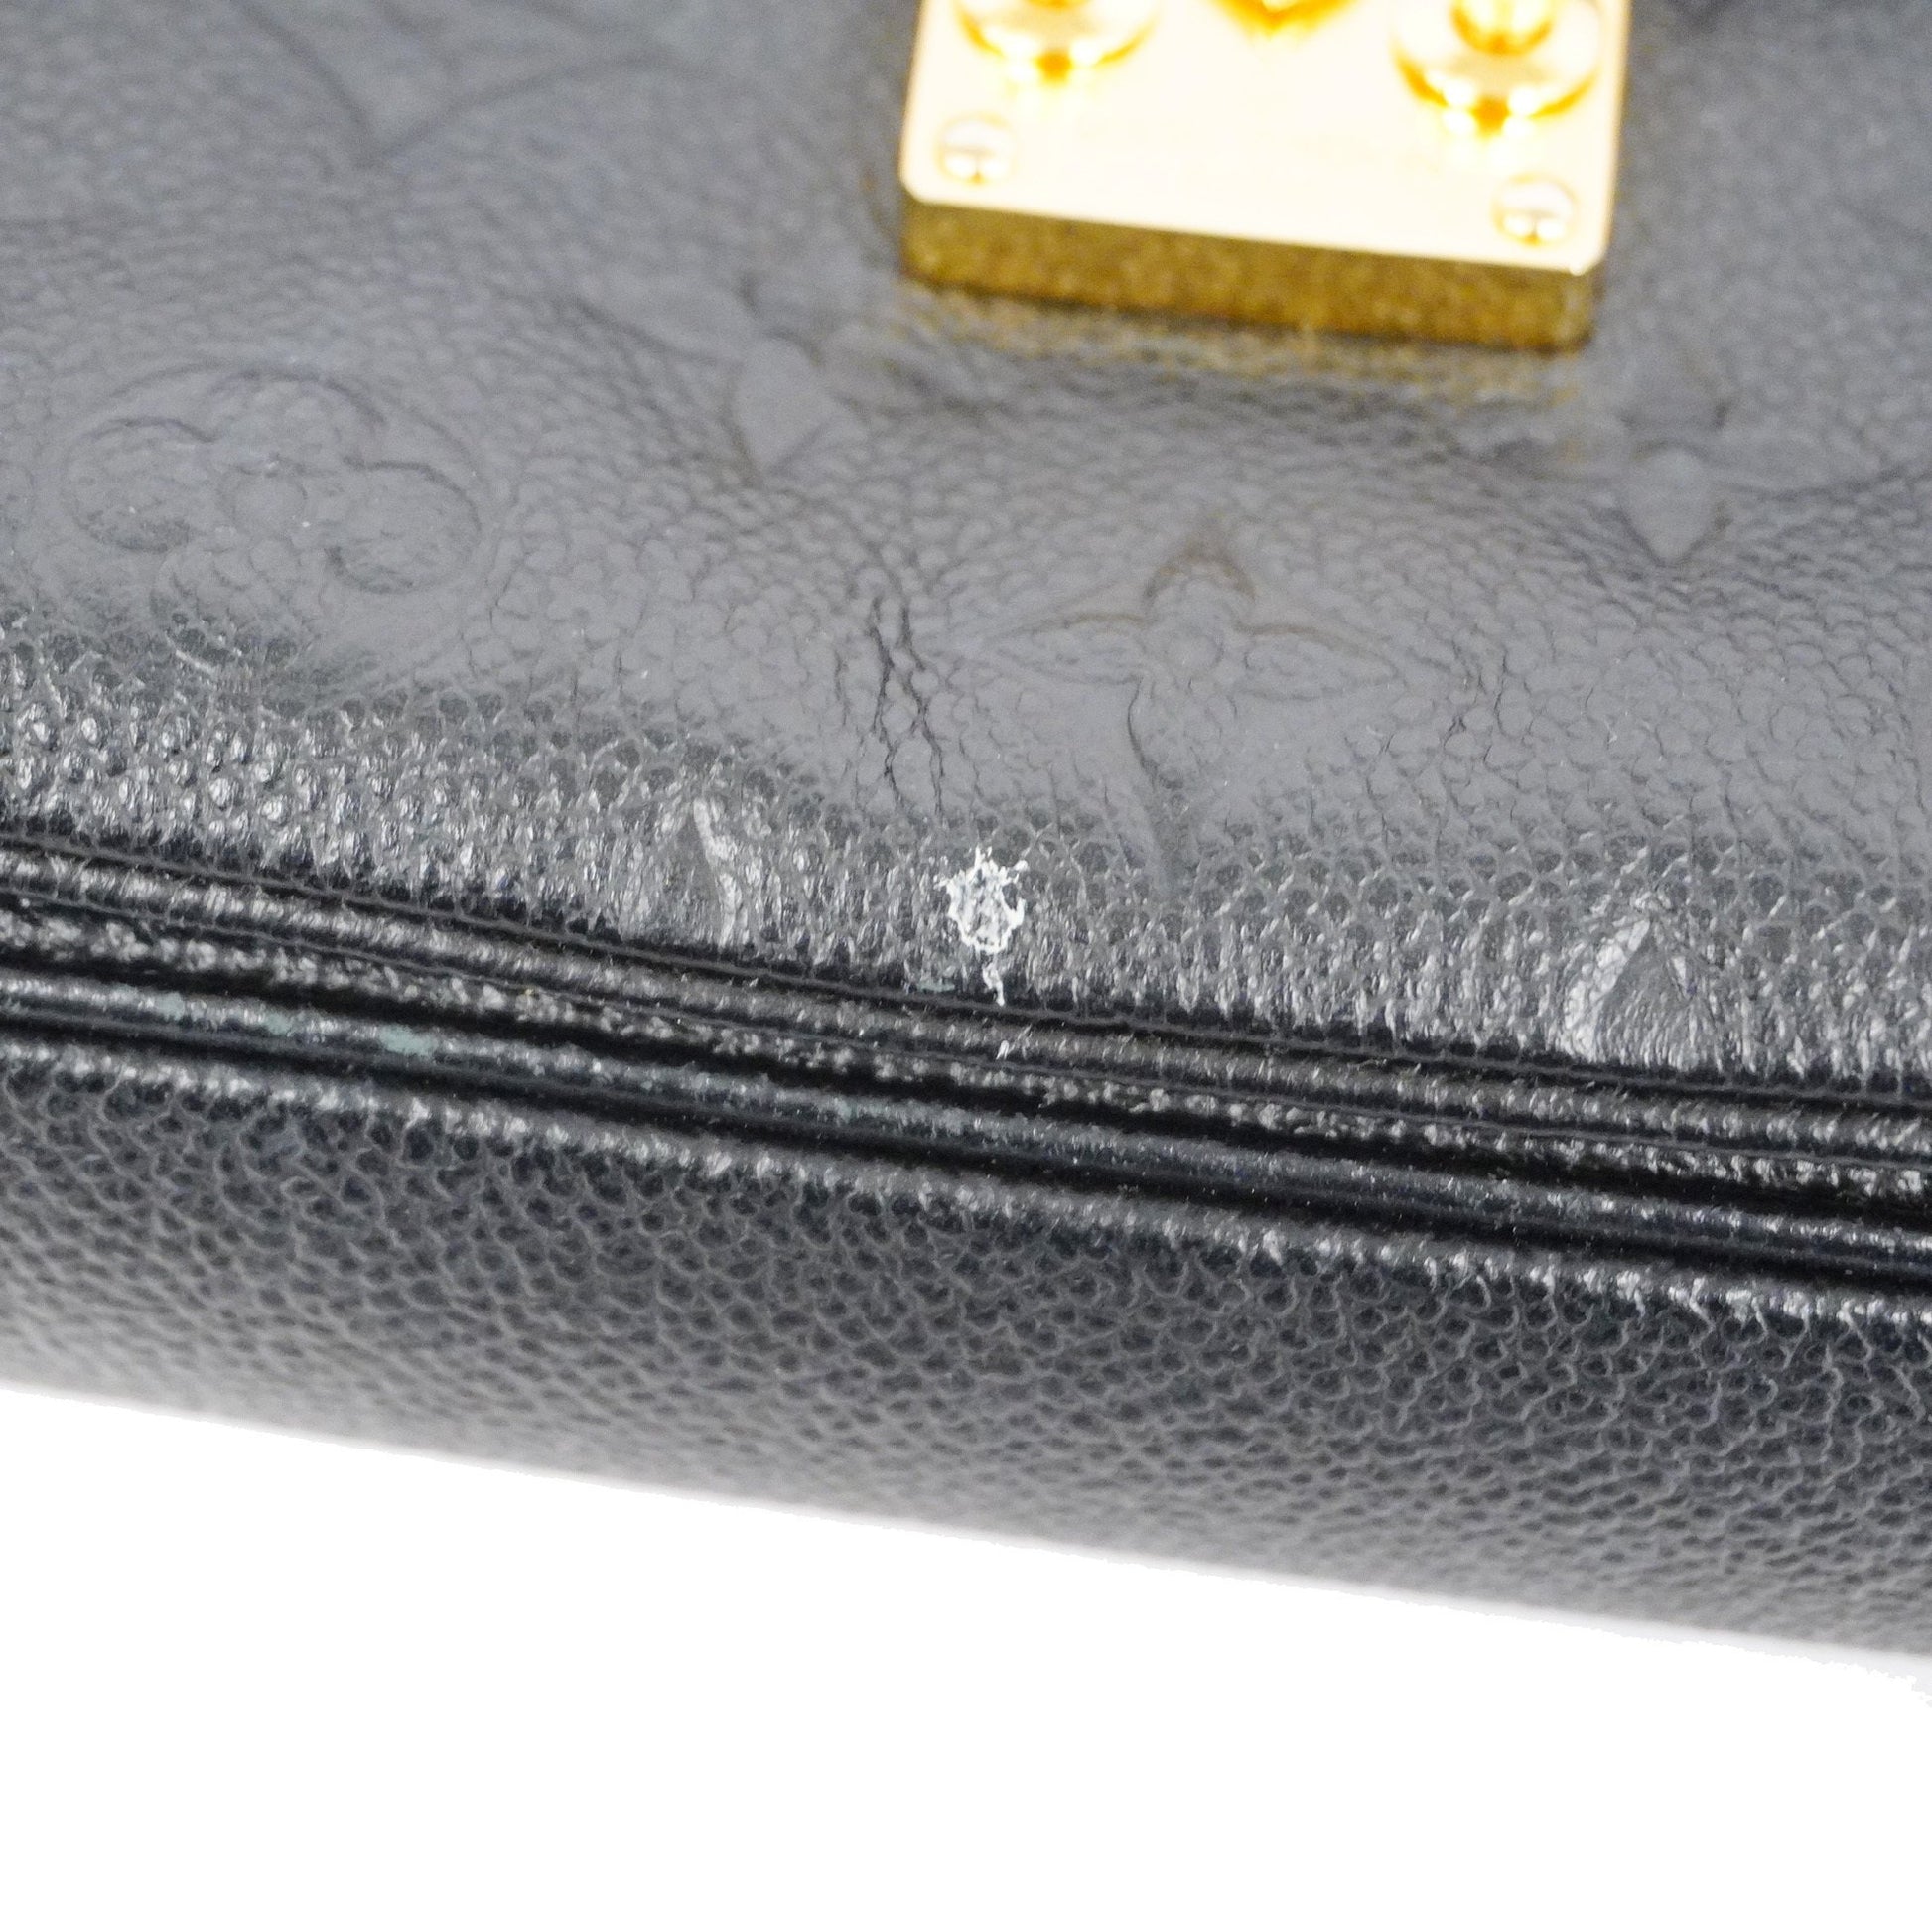 LOUIS VUITTON Louis Vuitton Pochette Metis MM Shoulder Bag M44018 Monogram  Empreinte Rose Poudre Gold Hardware 2WAY Handbag